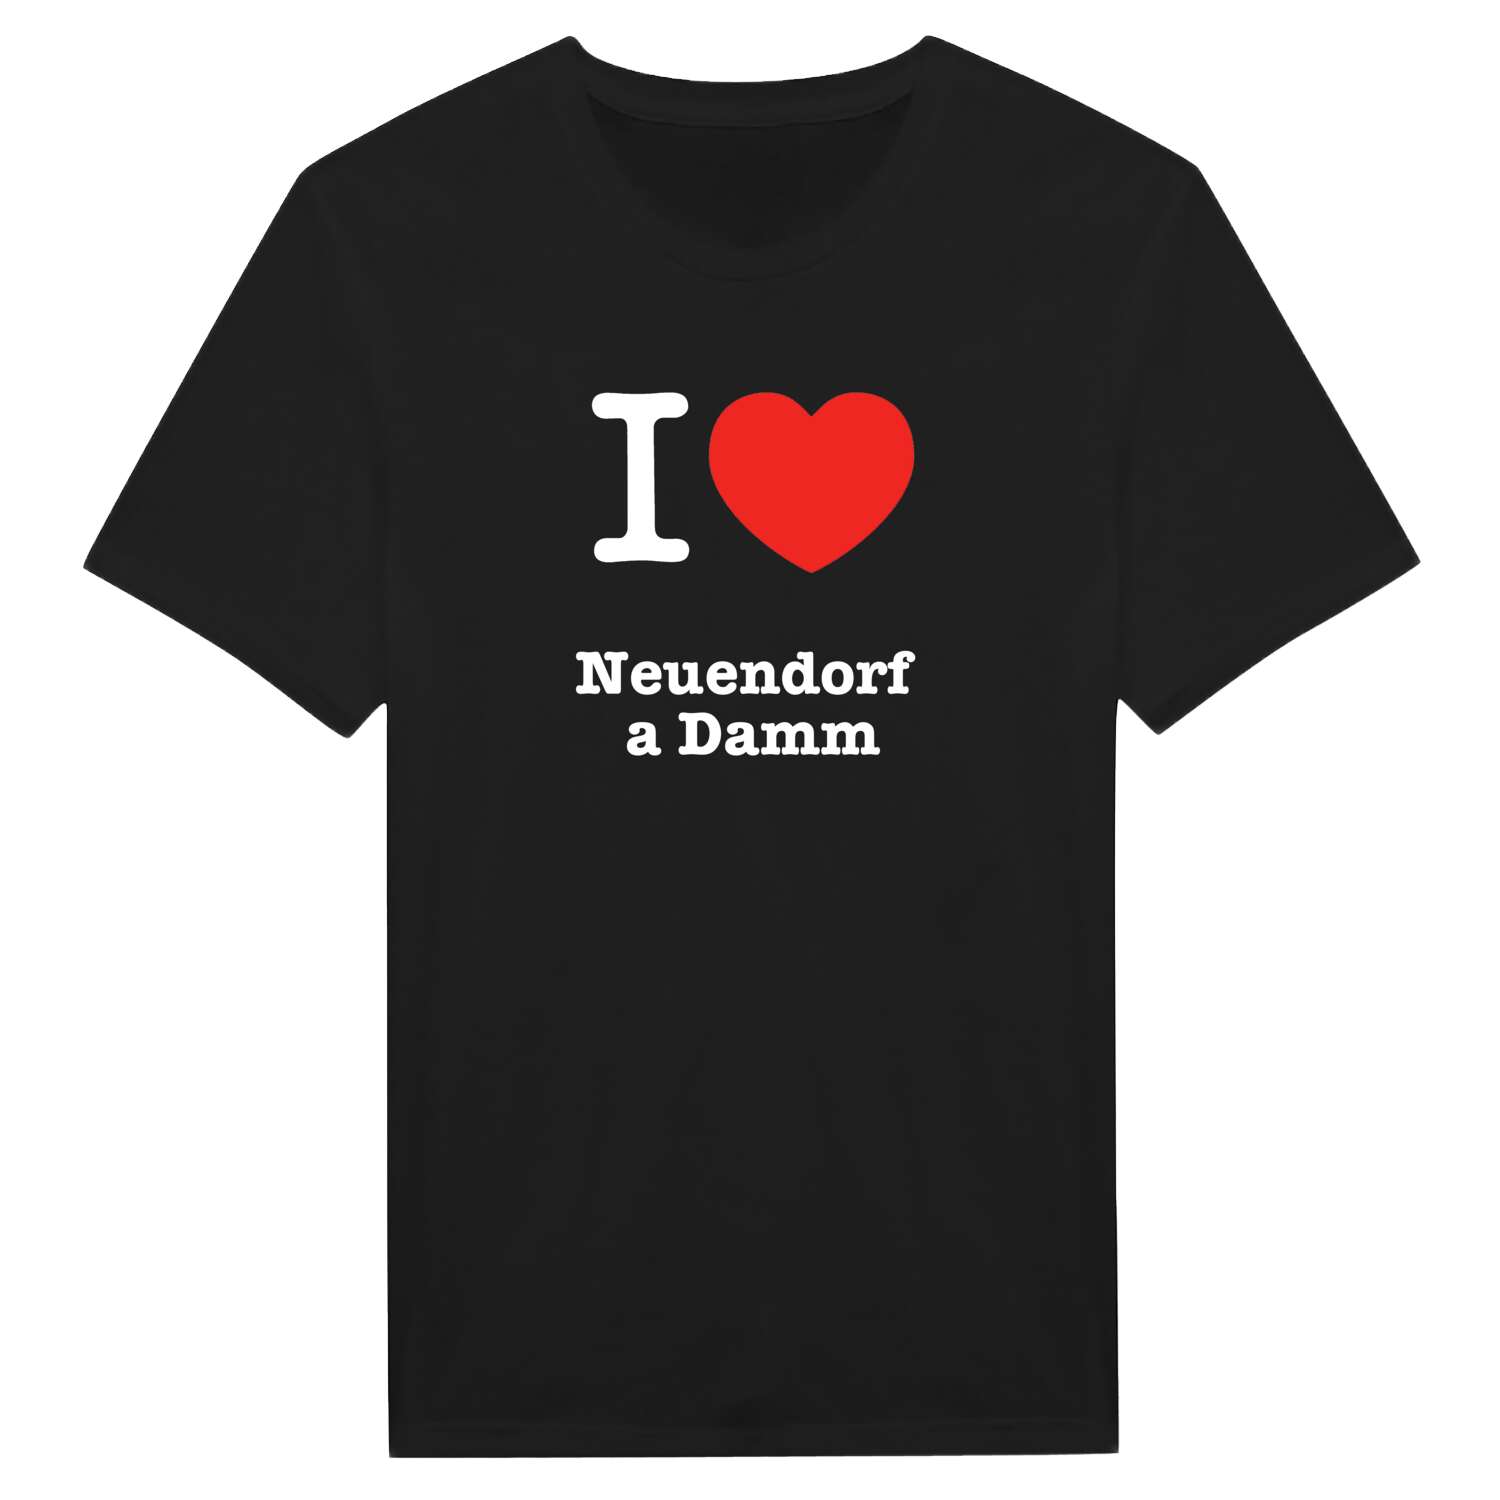 Neuendorf a Damm T-Shirt »I love«